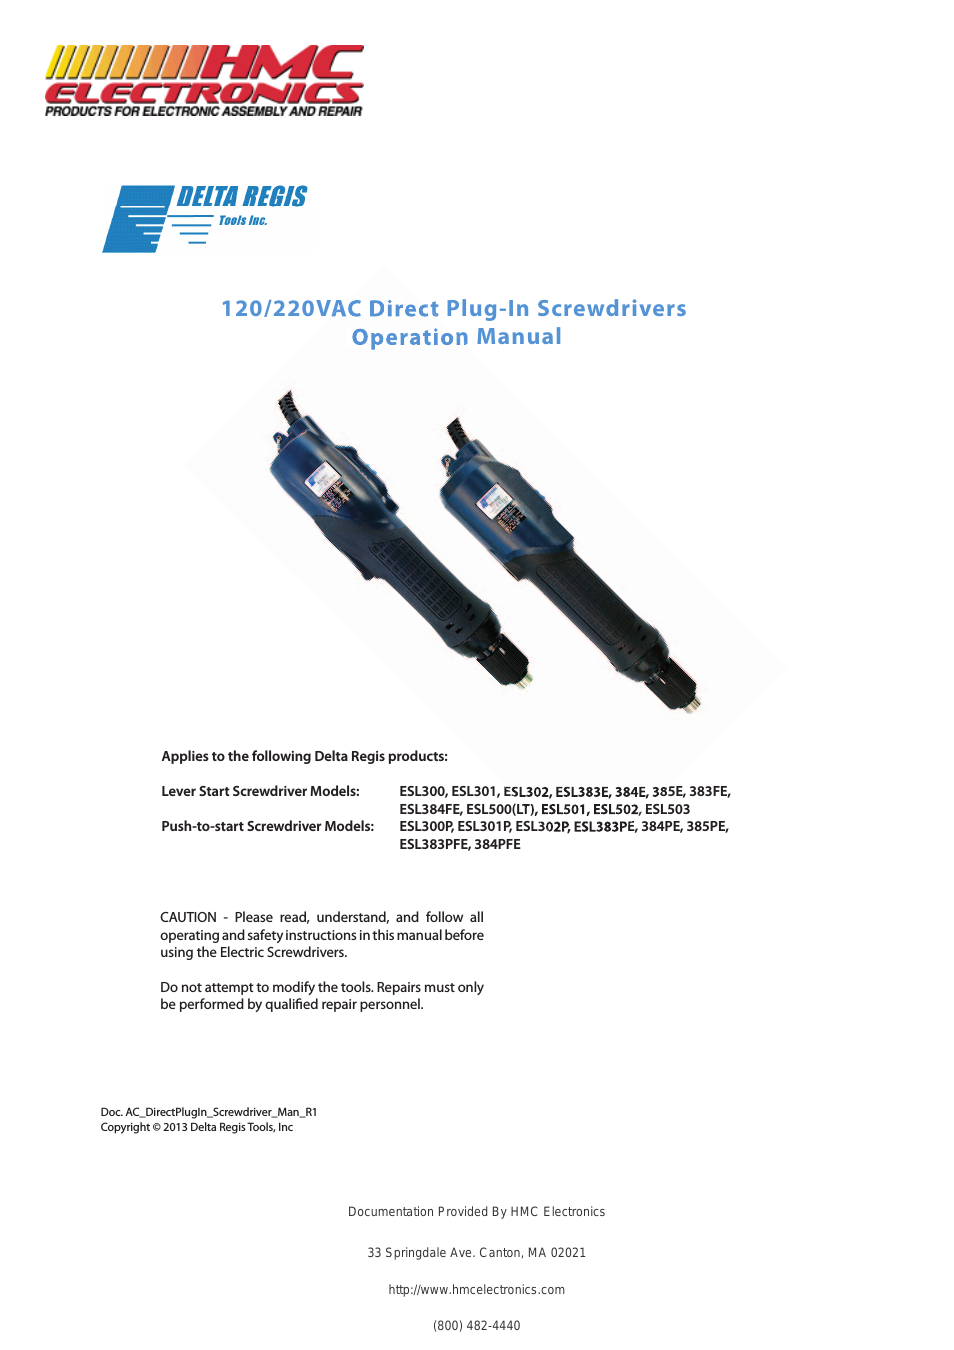 ESL301P Delta Regis Electric Screwdriver, Direct Plug-in